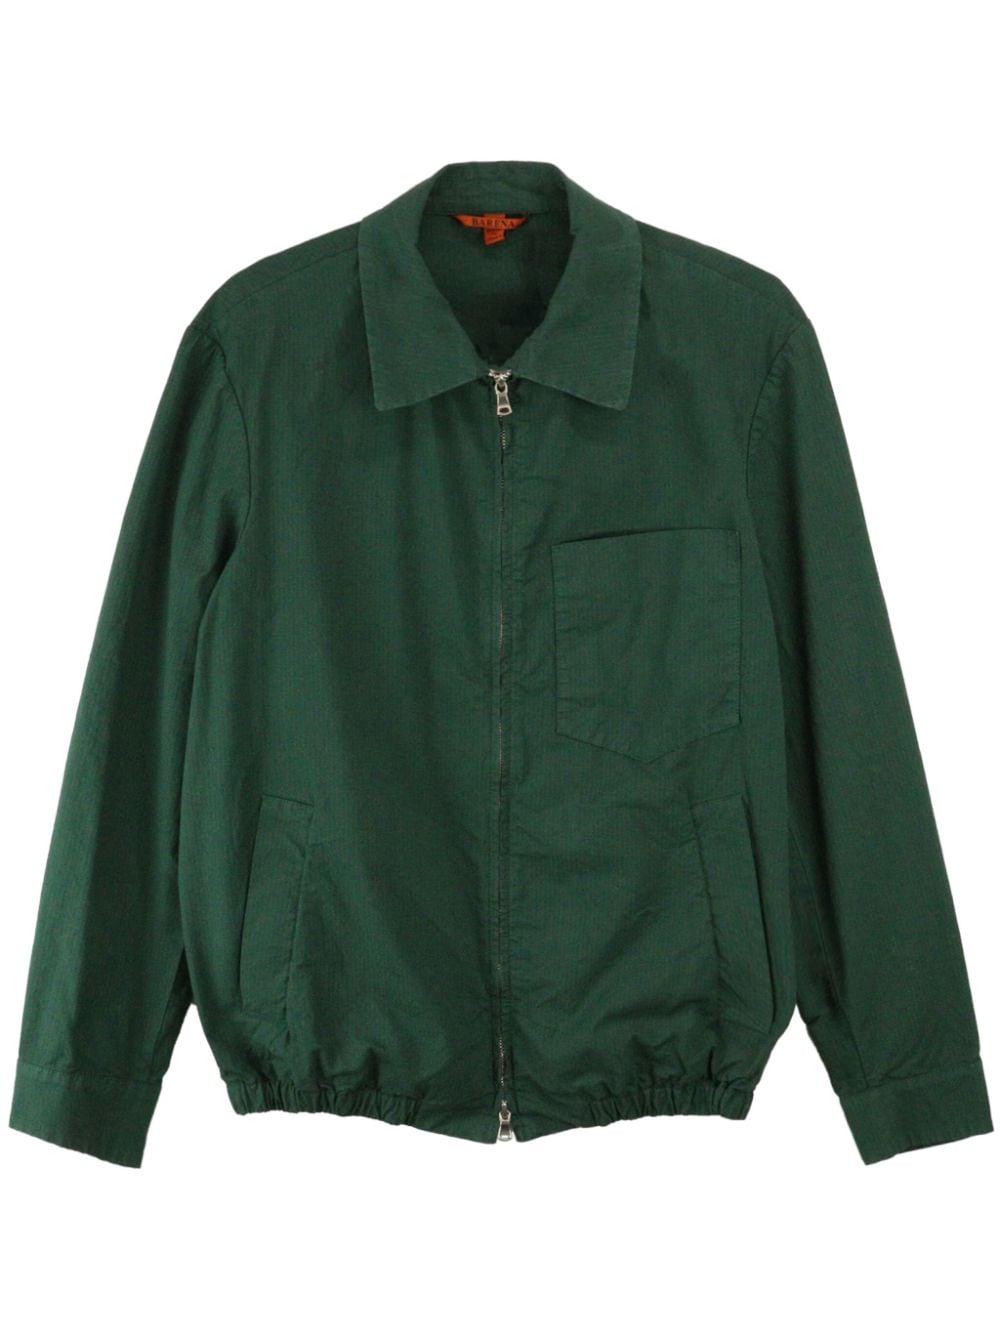 Image 1 of Barena Zaleto Mariol zip-up shirt jacket